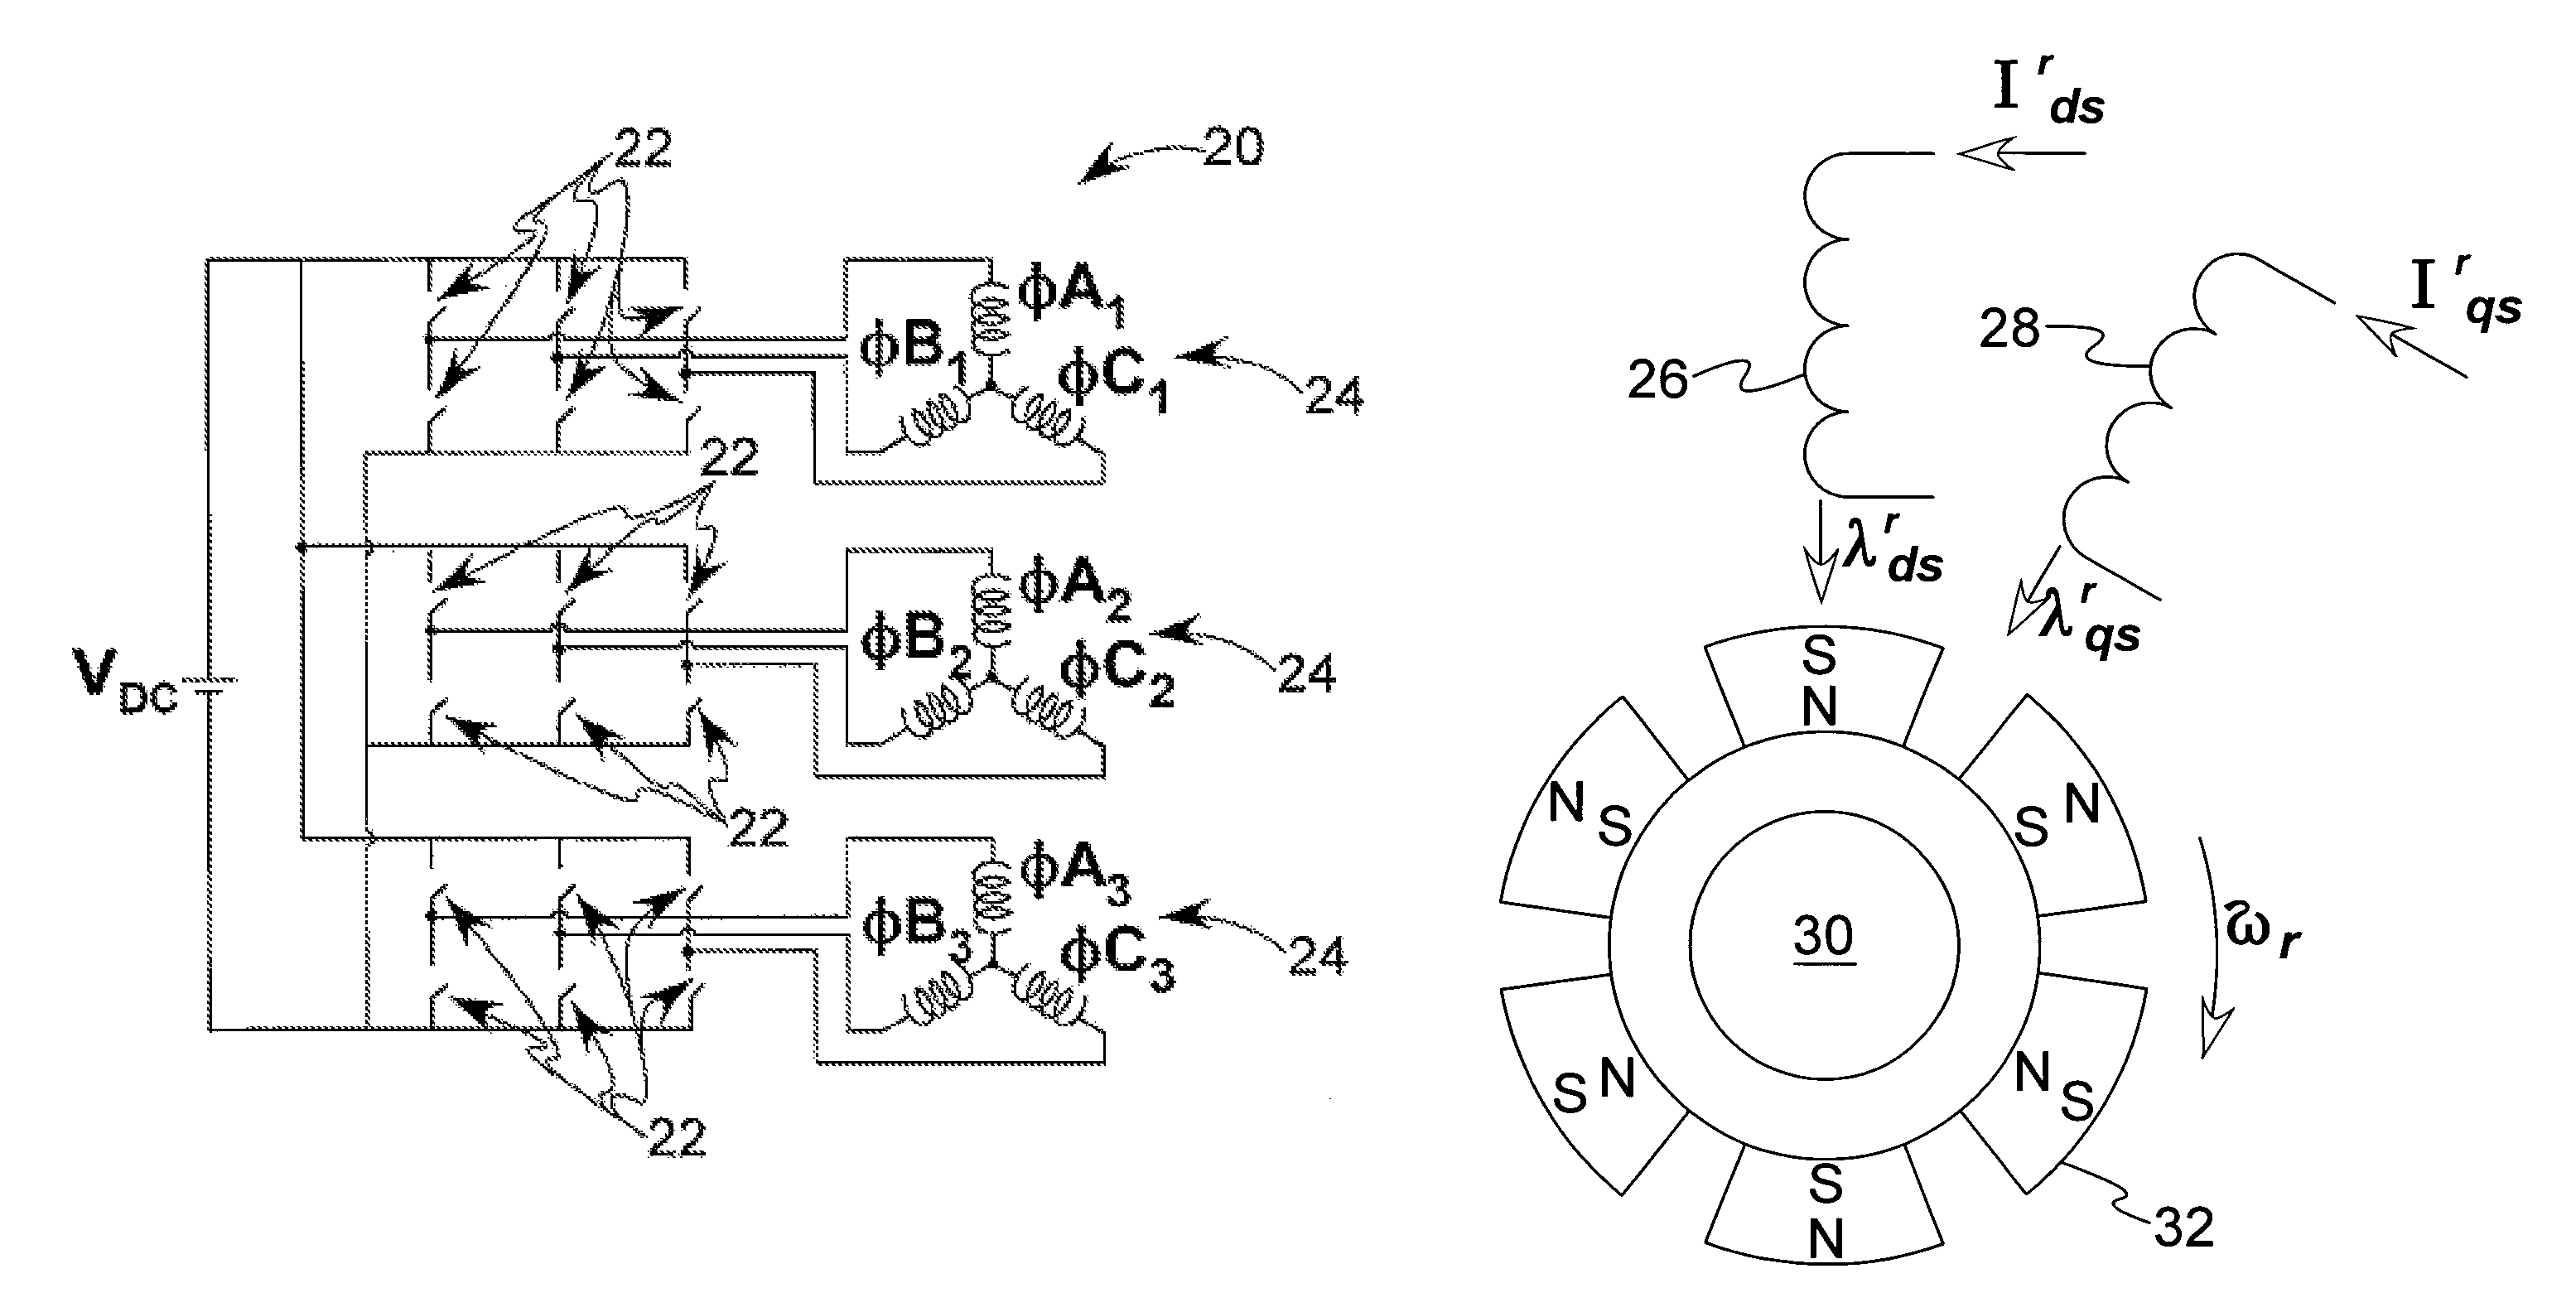 Control system for bearingless motor-generator